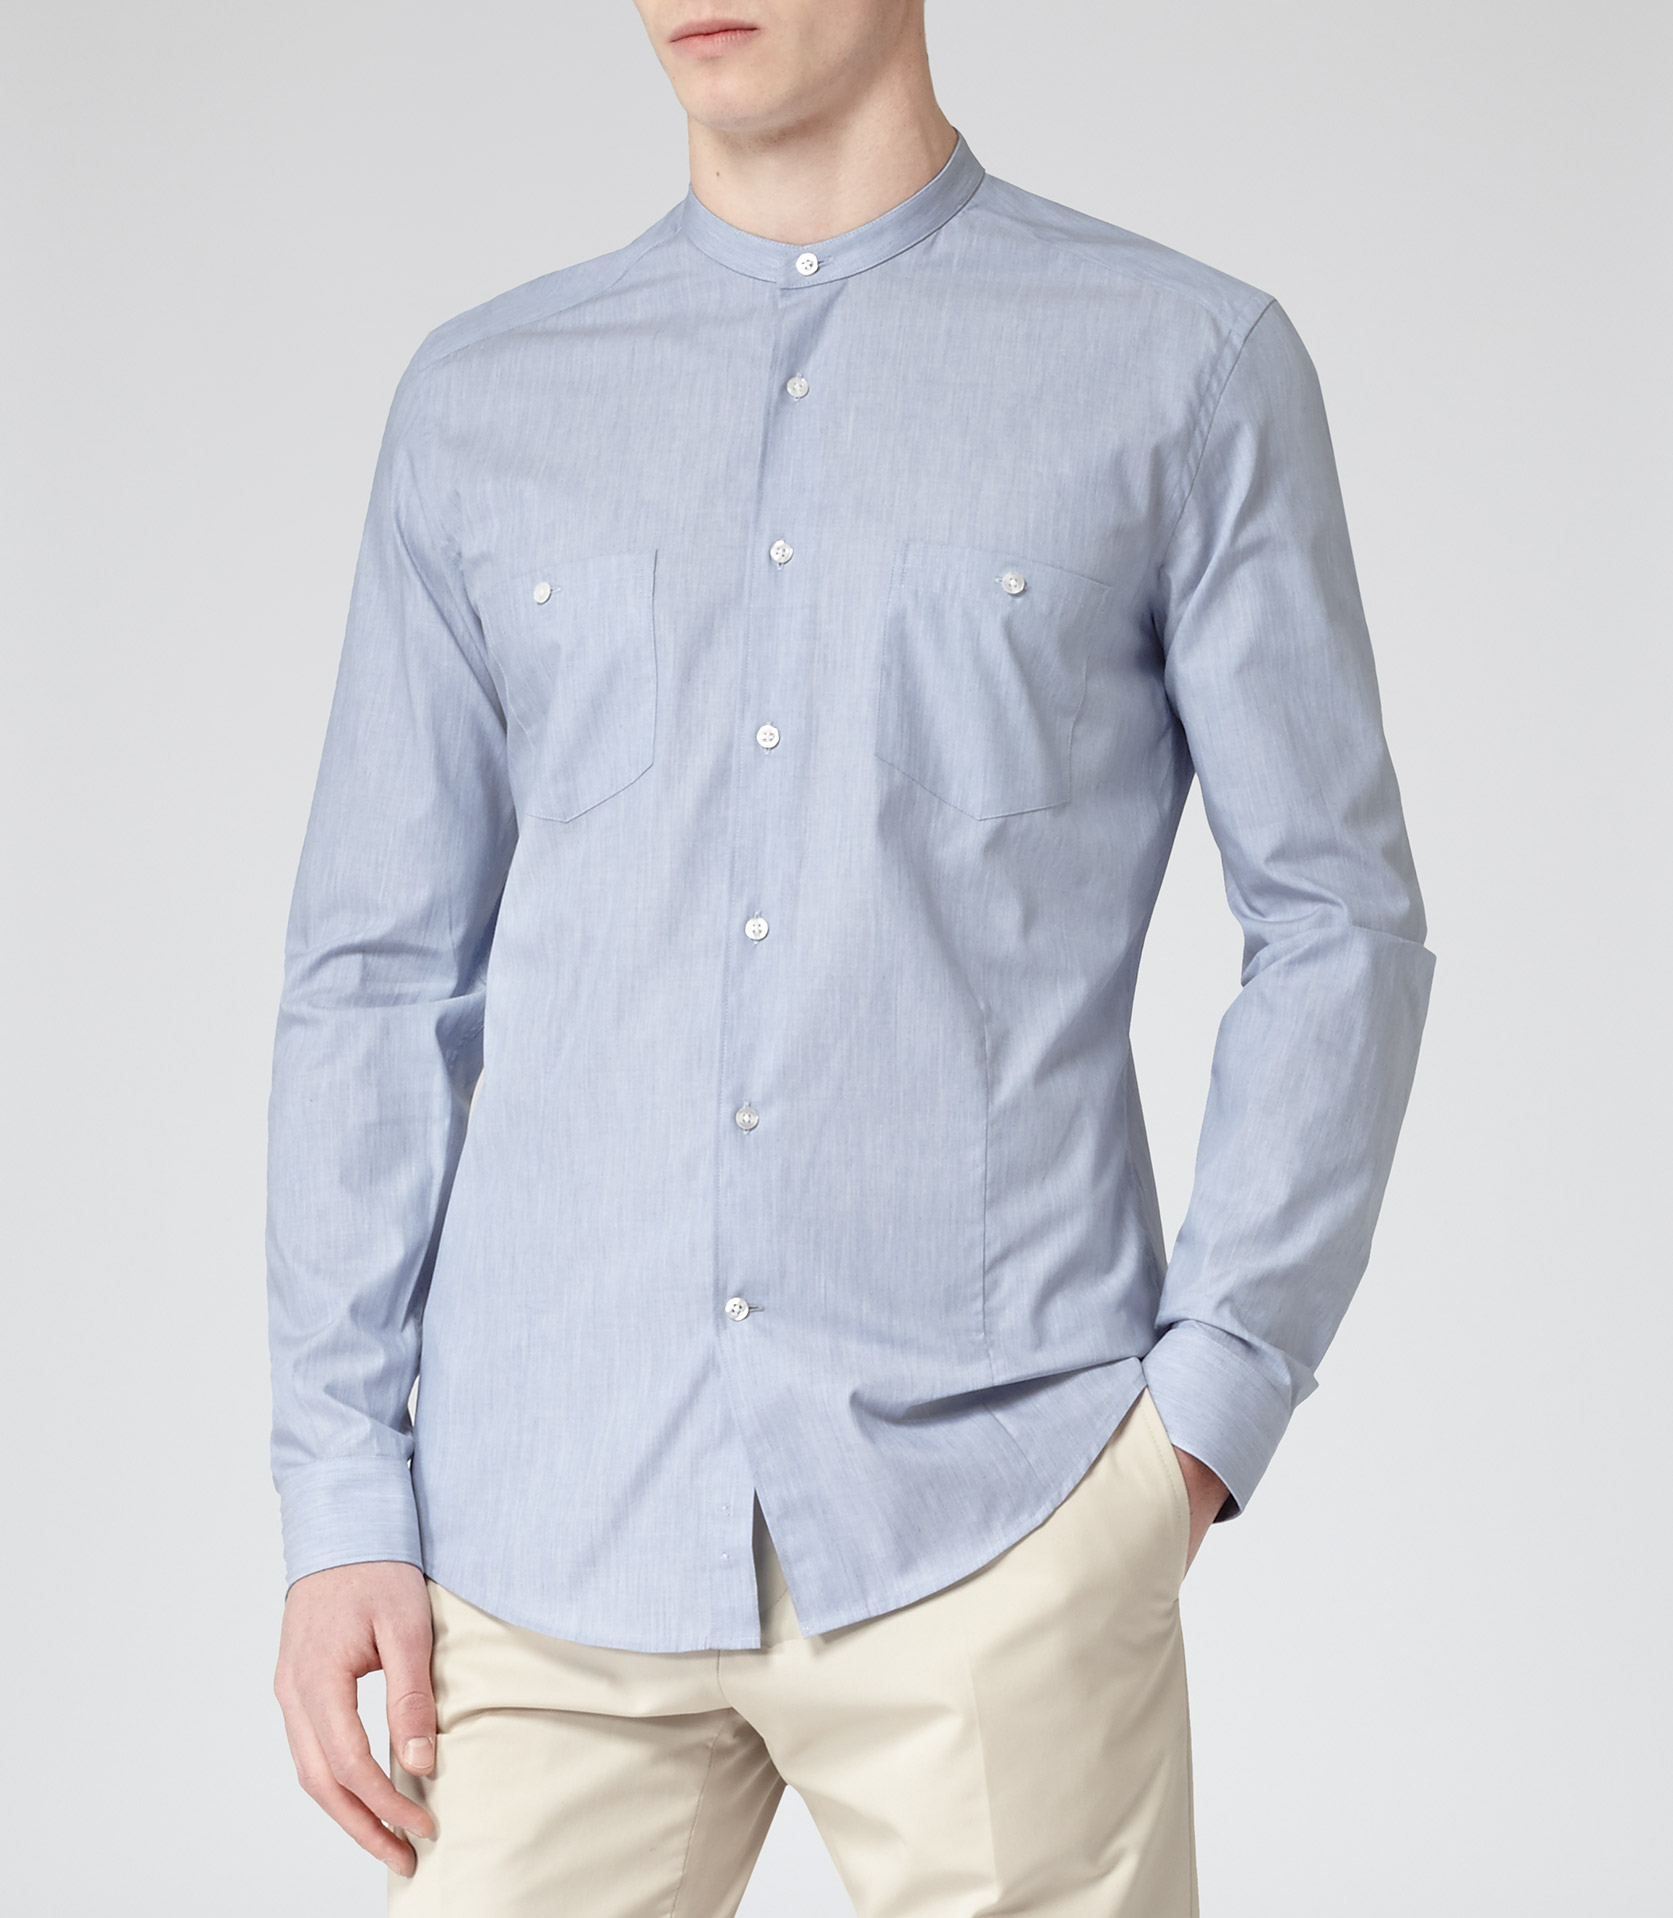 Reiss Baychester Collarless Shirt in Blue for Men - Lyst